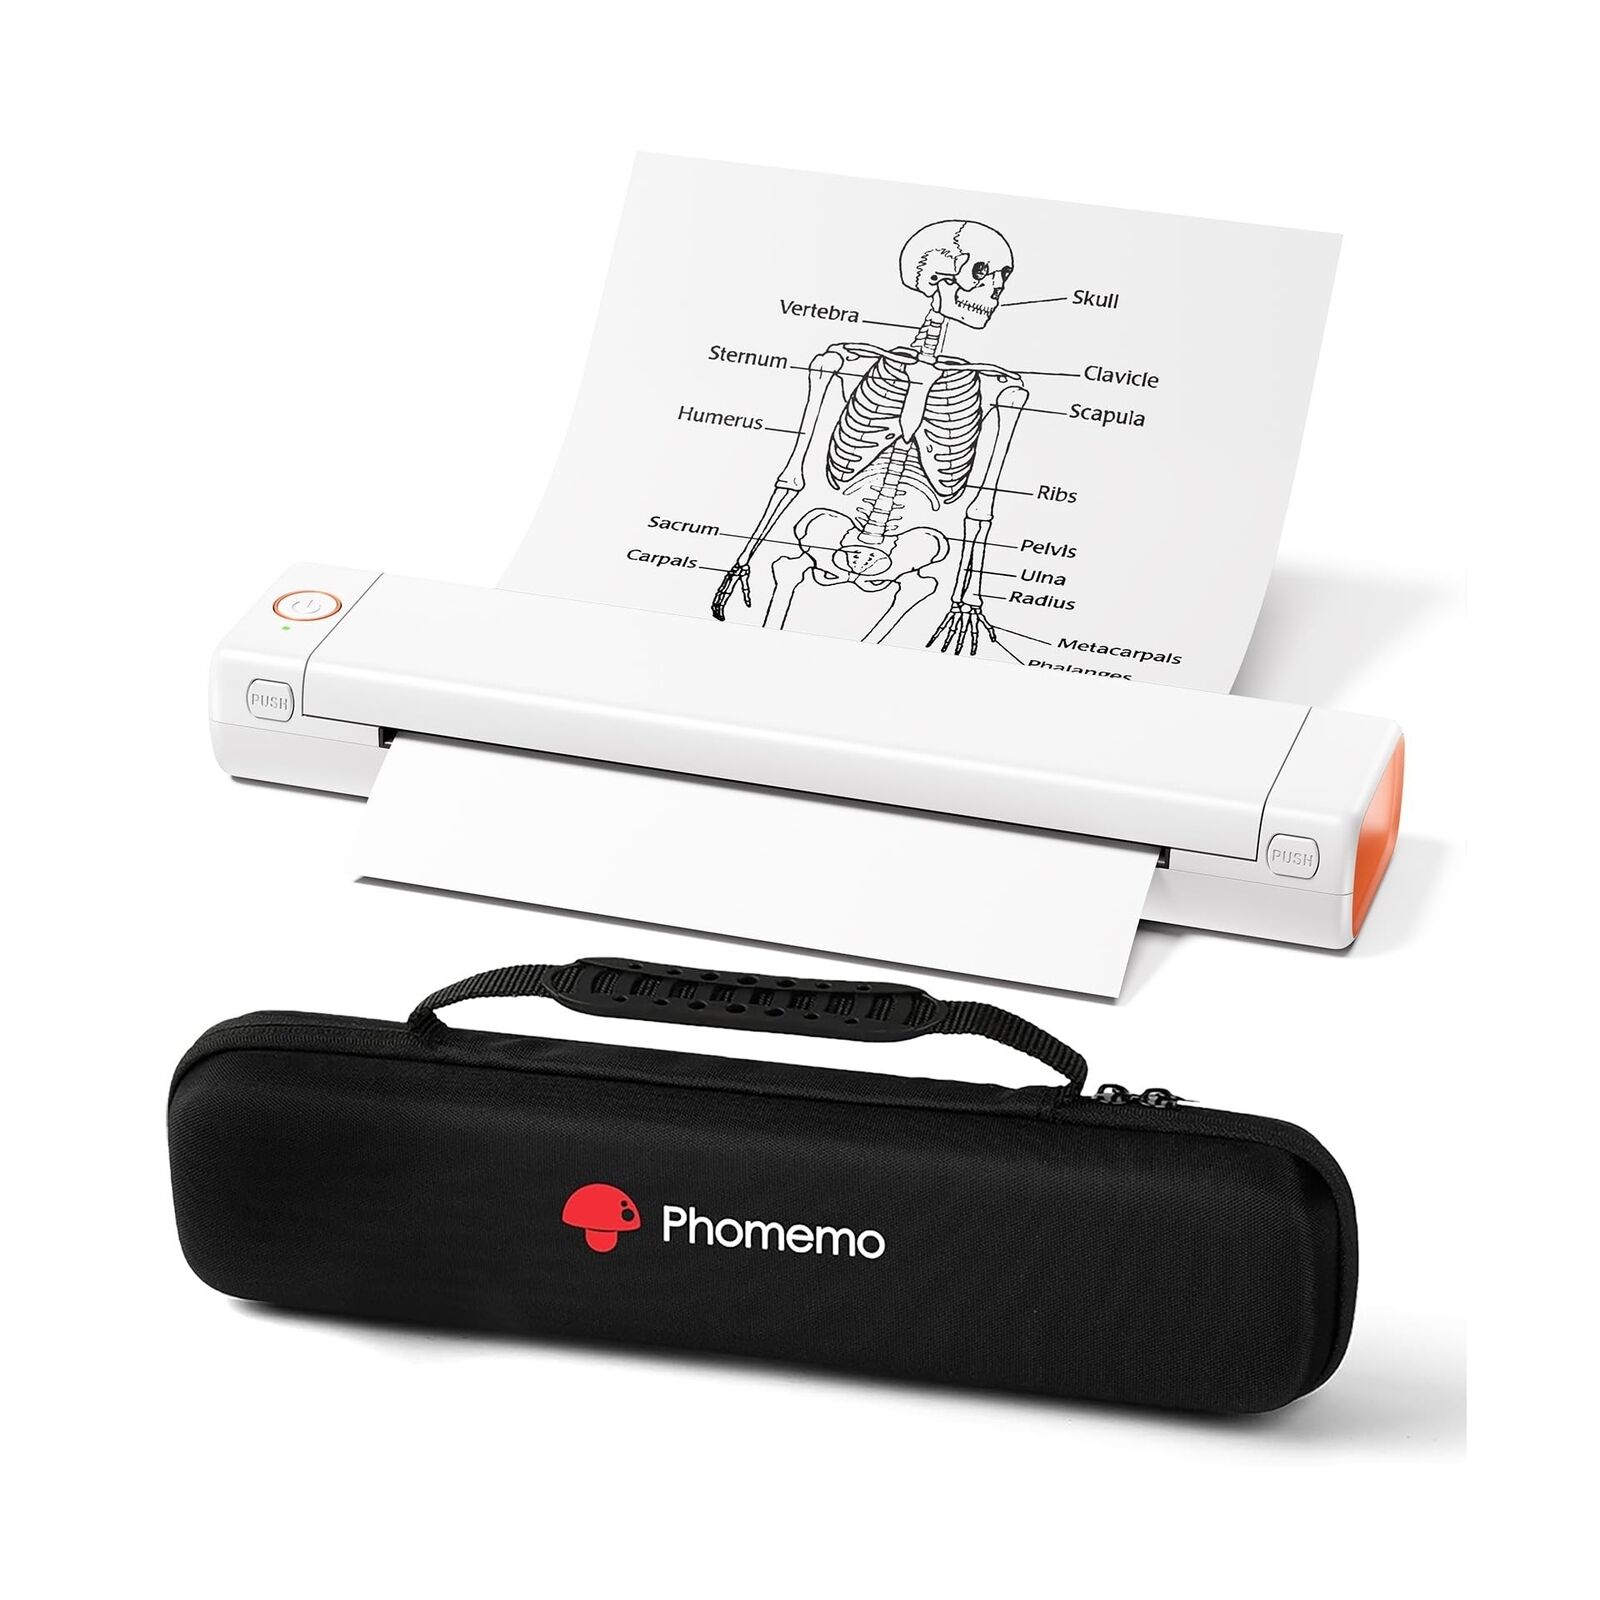 Phomemo Portable Printer - [Upgrade] Portable Printer Wireless for Travel Com...